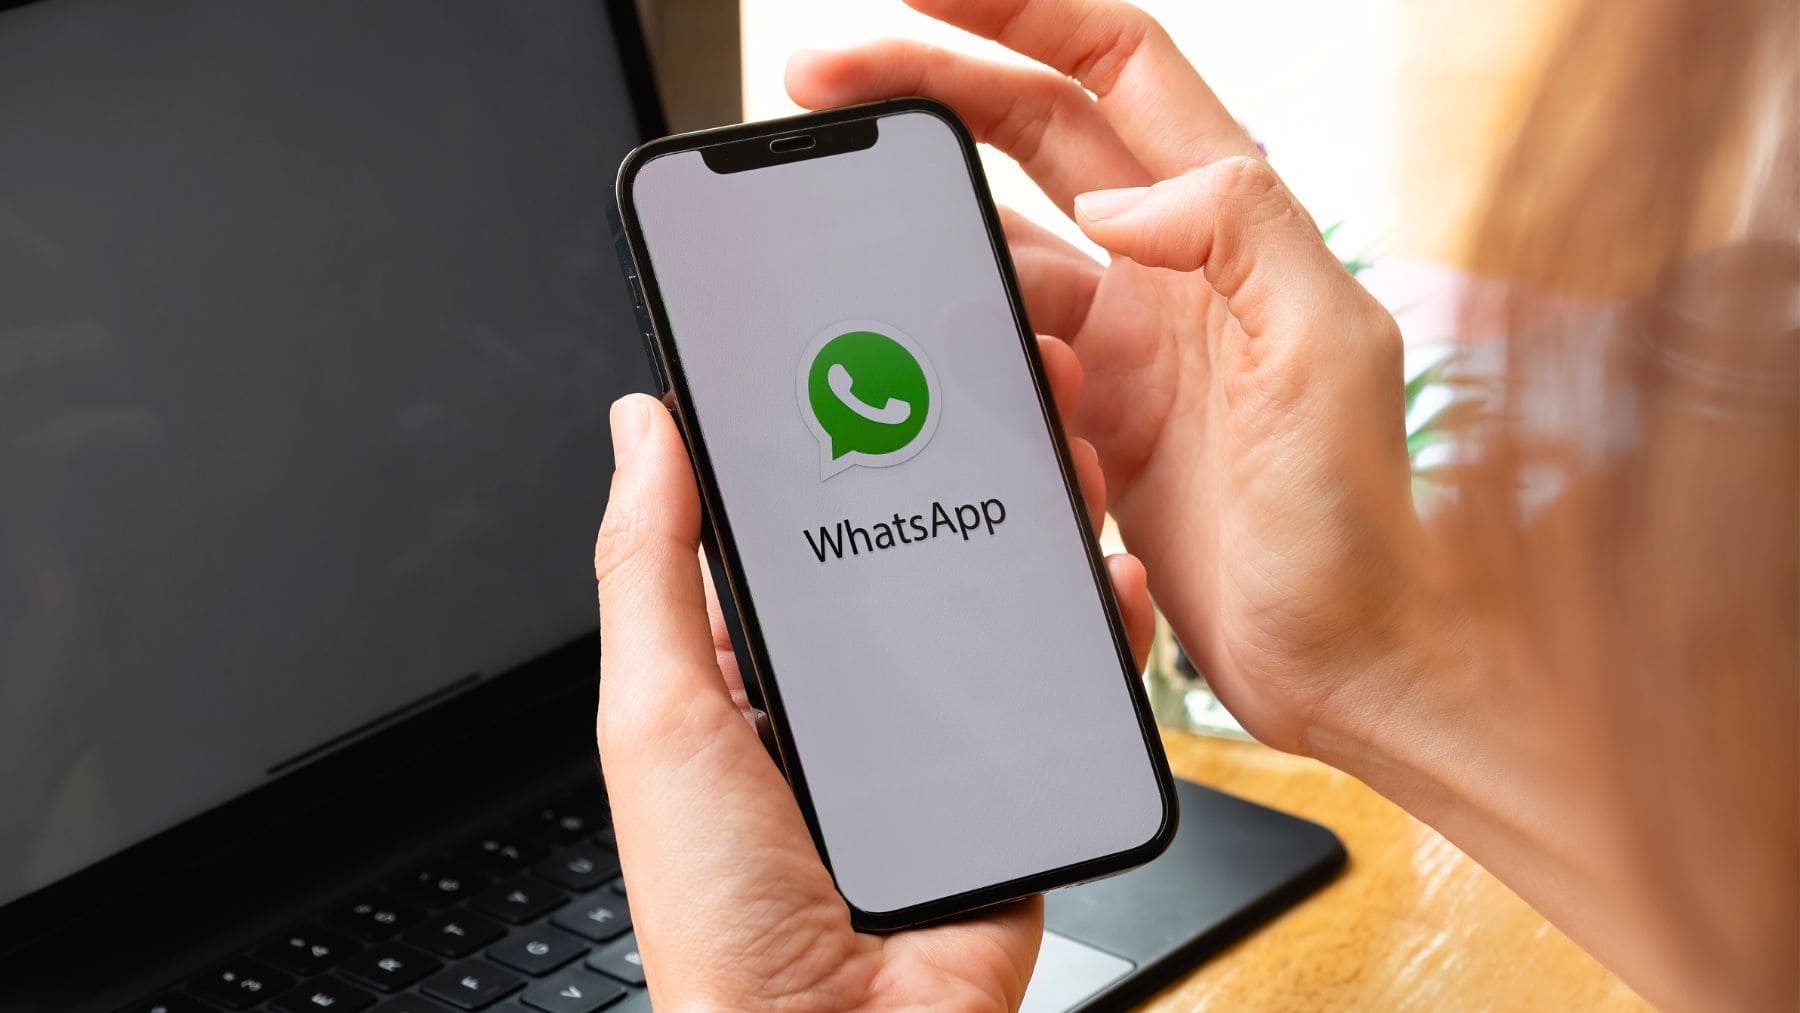 WhatsApp conversation app with green dot